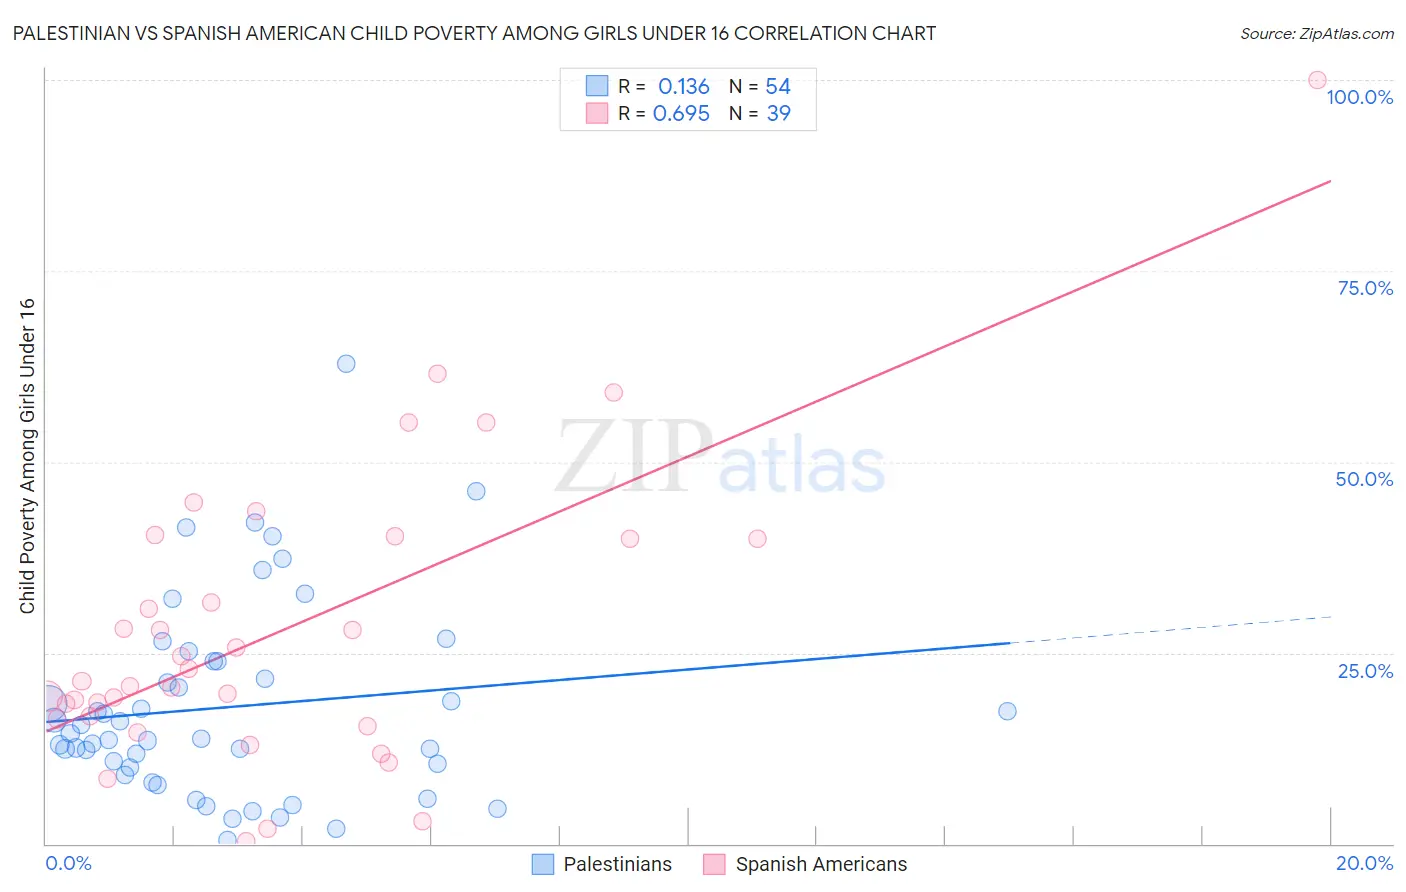 Palestinian vs Spanish American Child Poverty Among Girls Under 16